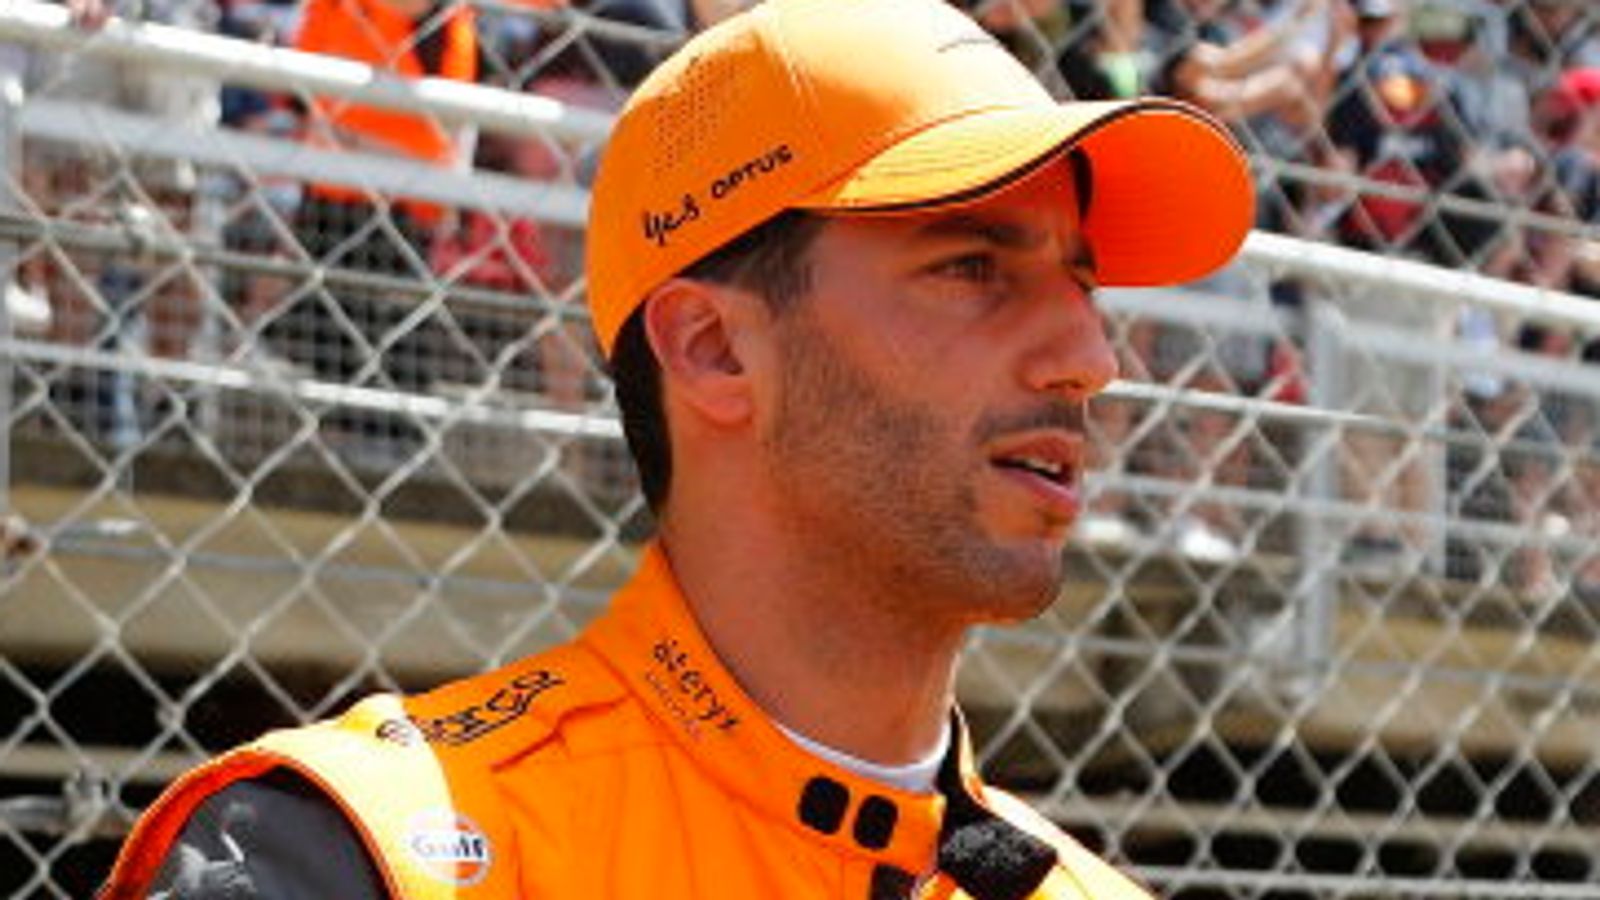 Daniel Ricciardo: McLaren CEO Zak Brown says driver not meeting team's expectations